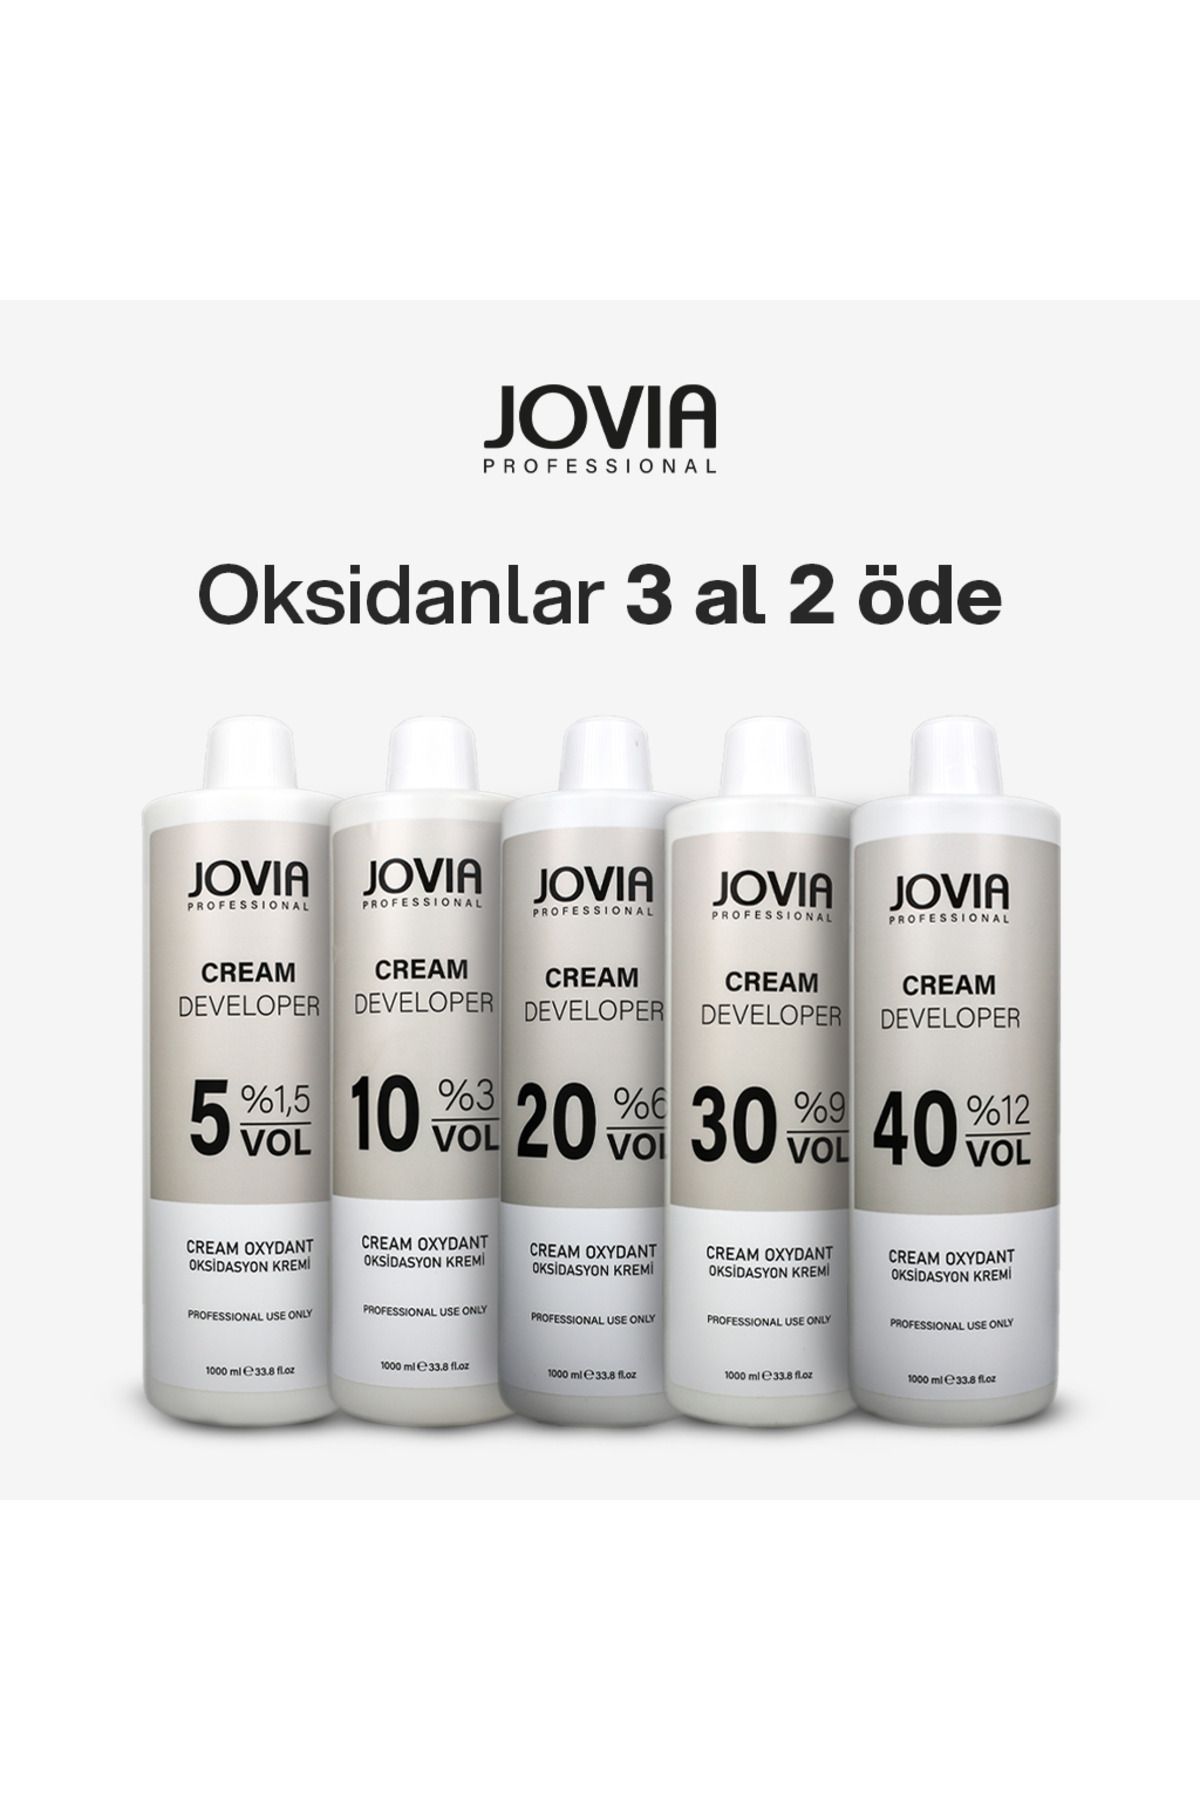 Jovia Cream Developer 10 Vol %3 Cream Oxydant Oksidasyon Kremi